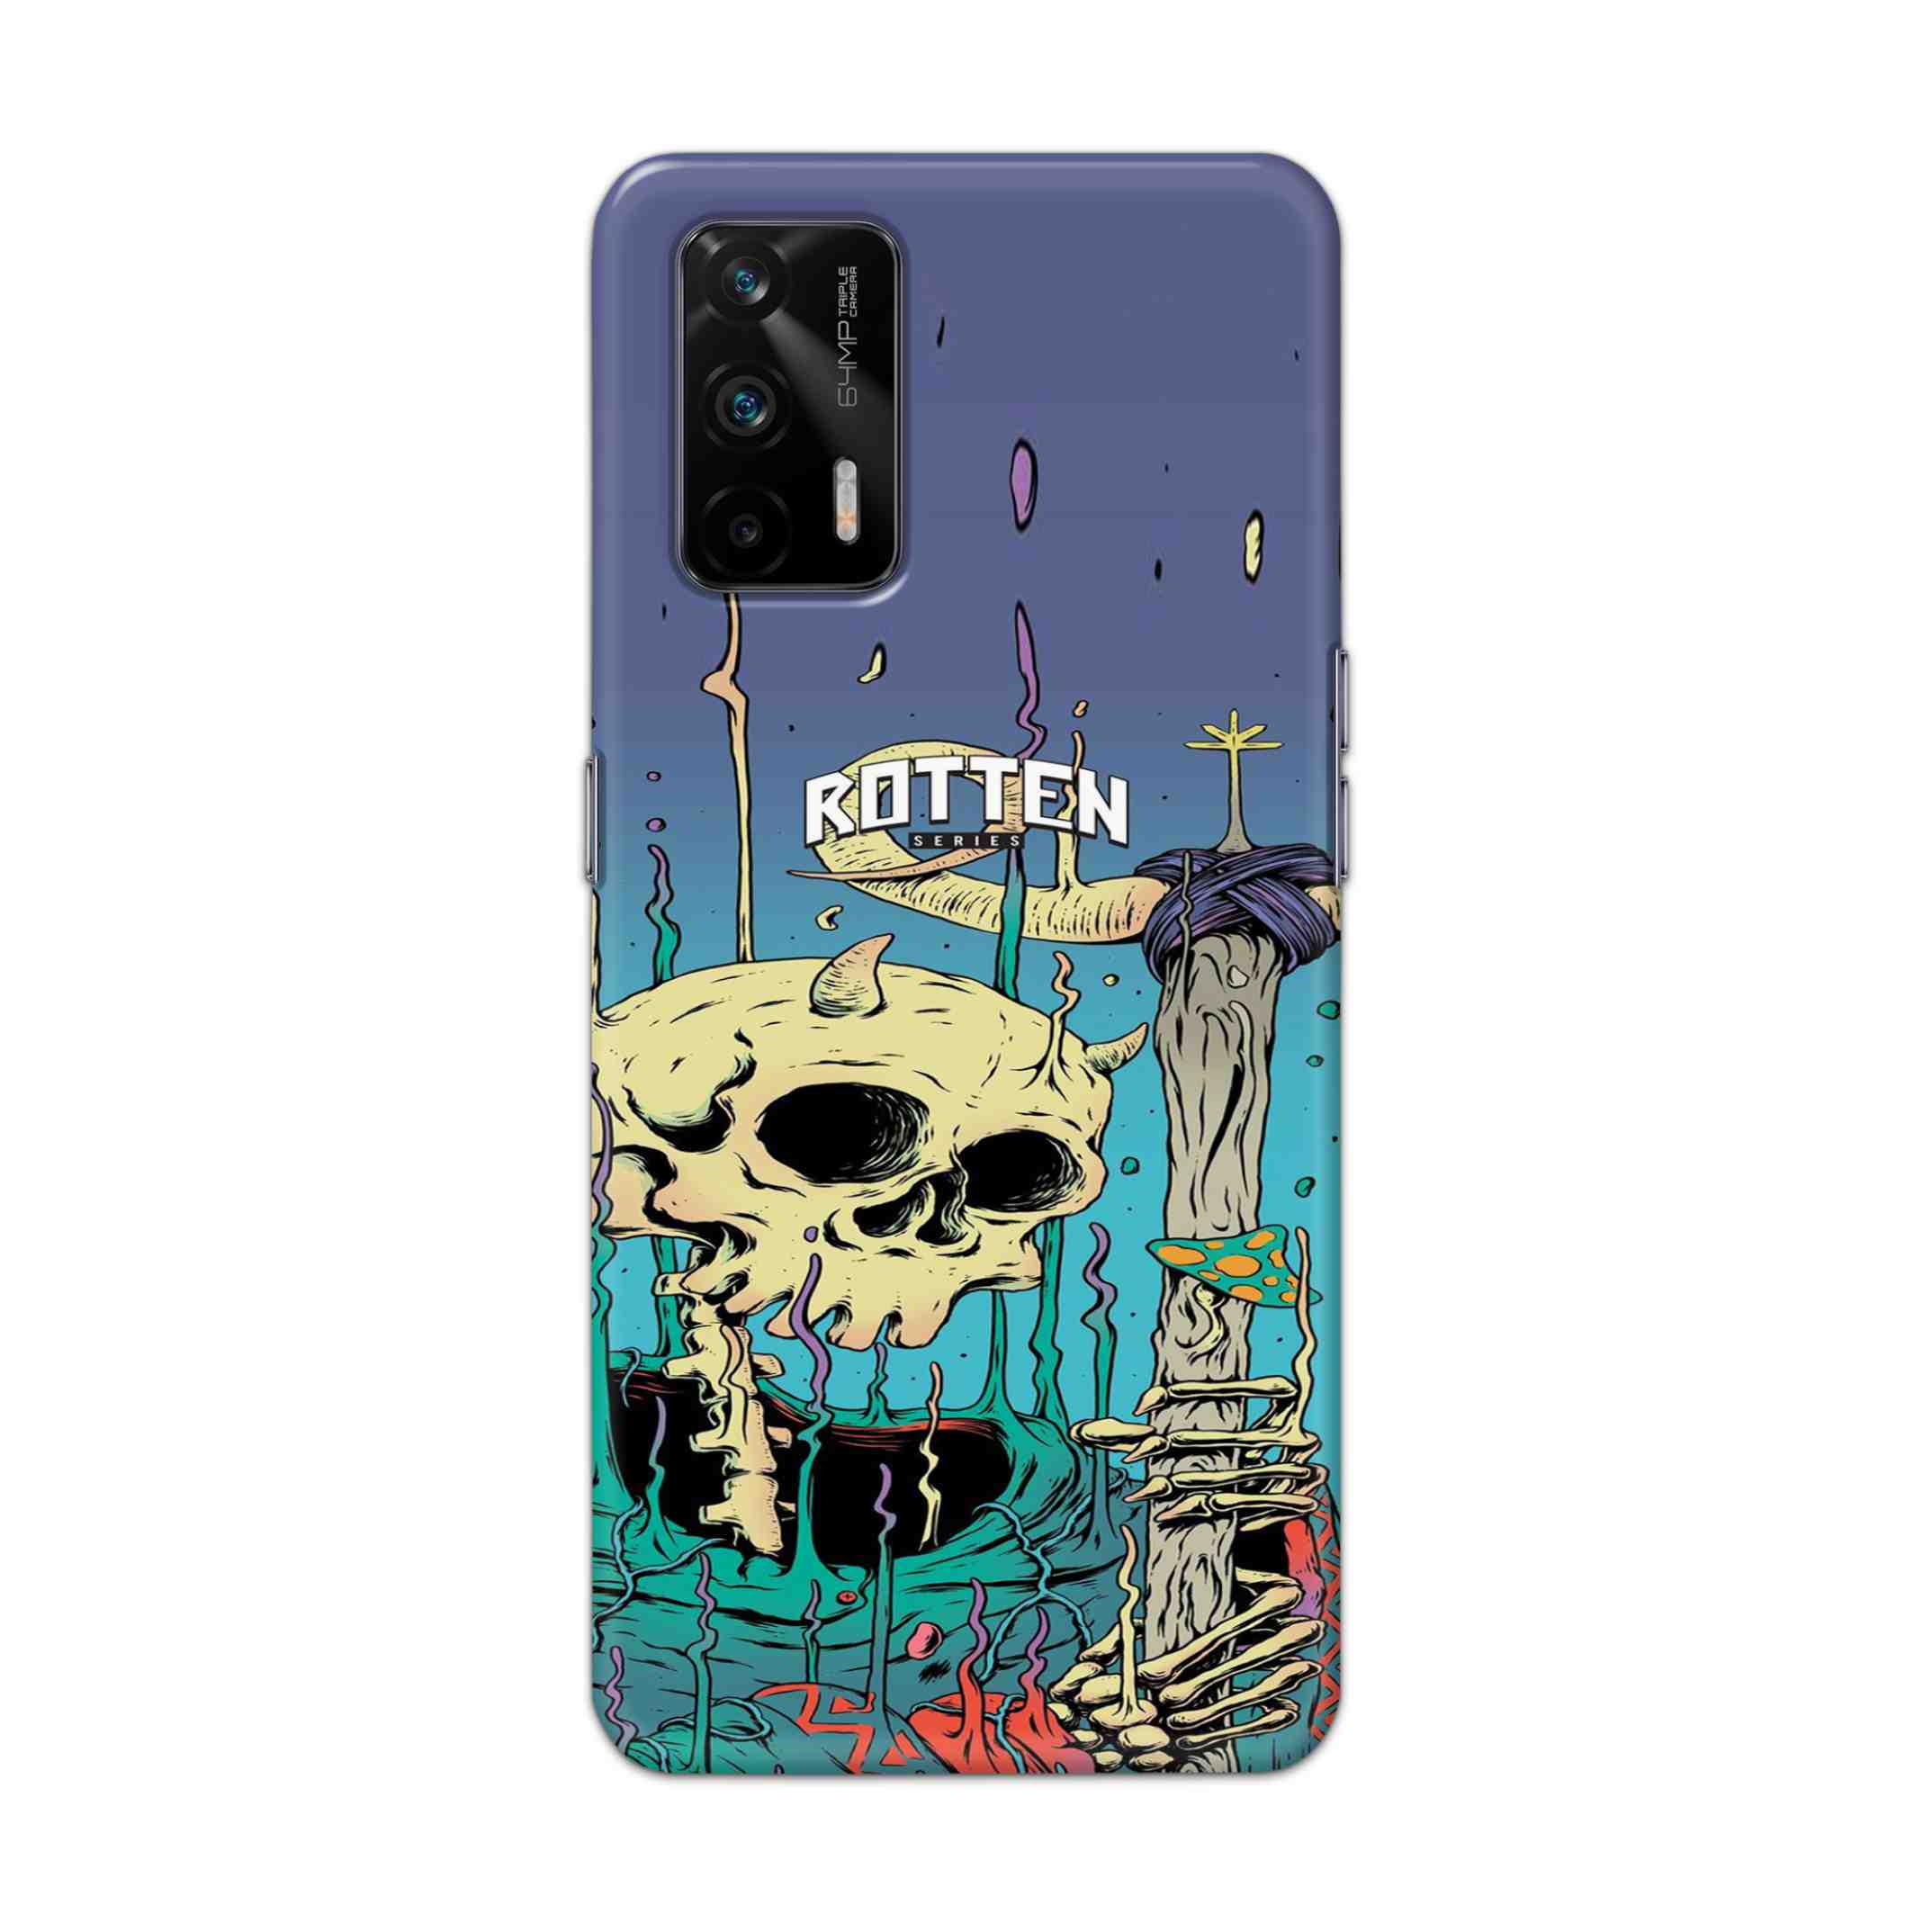 Buy Skull Hard Back Mobile Phone Case Cover For Realme X7 Max Online